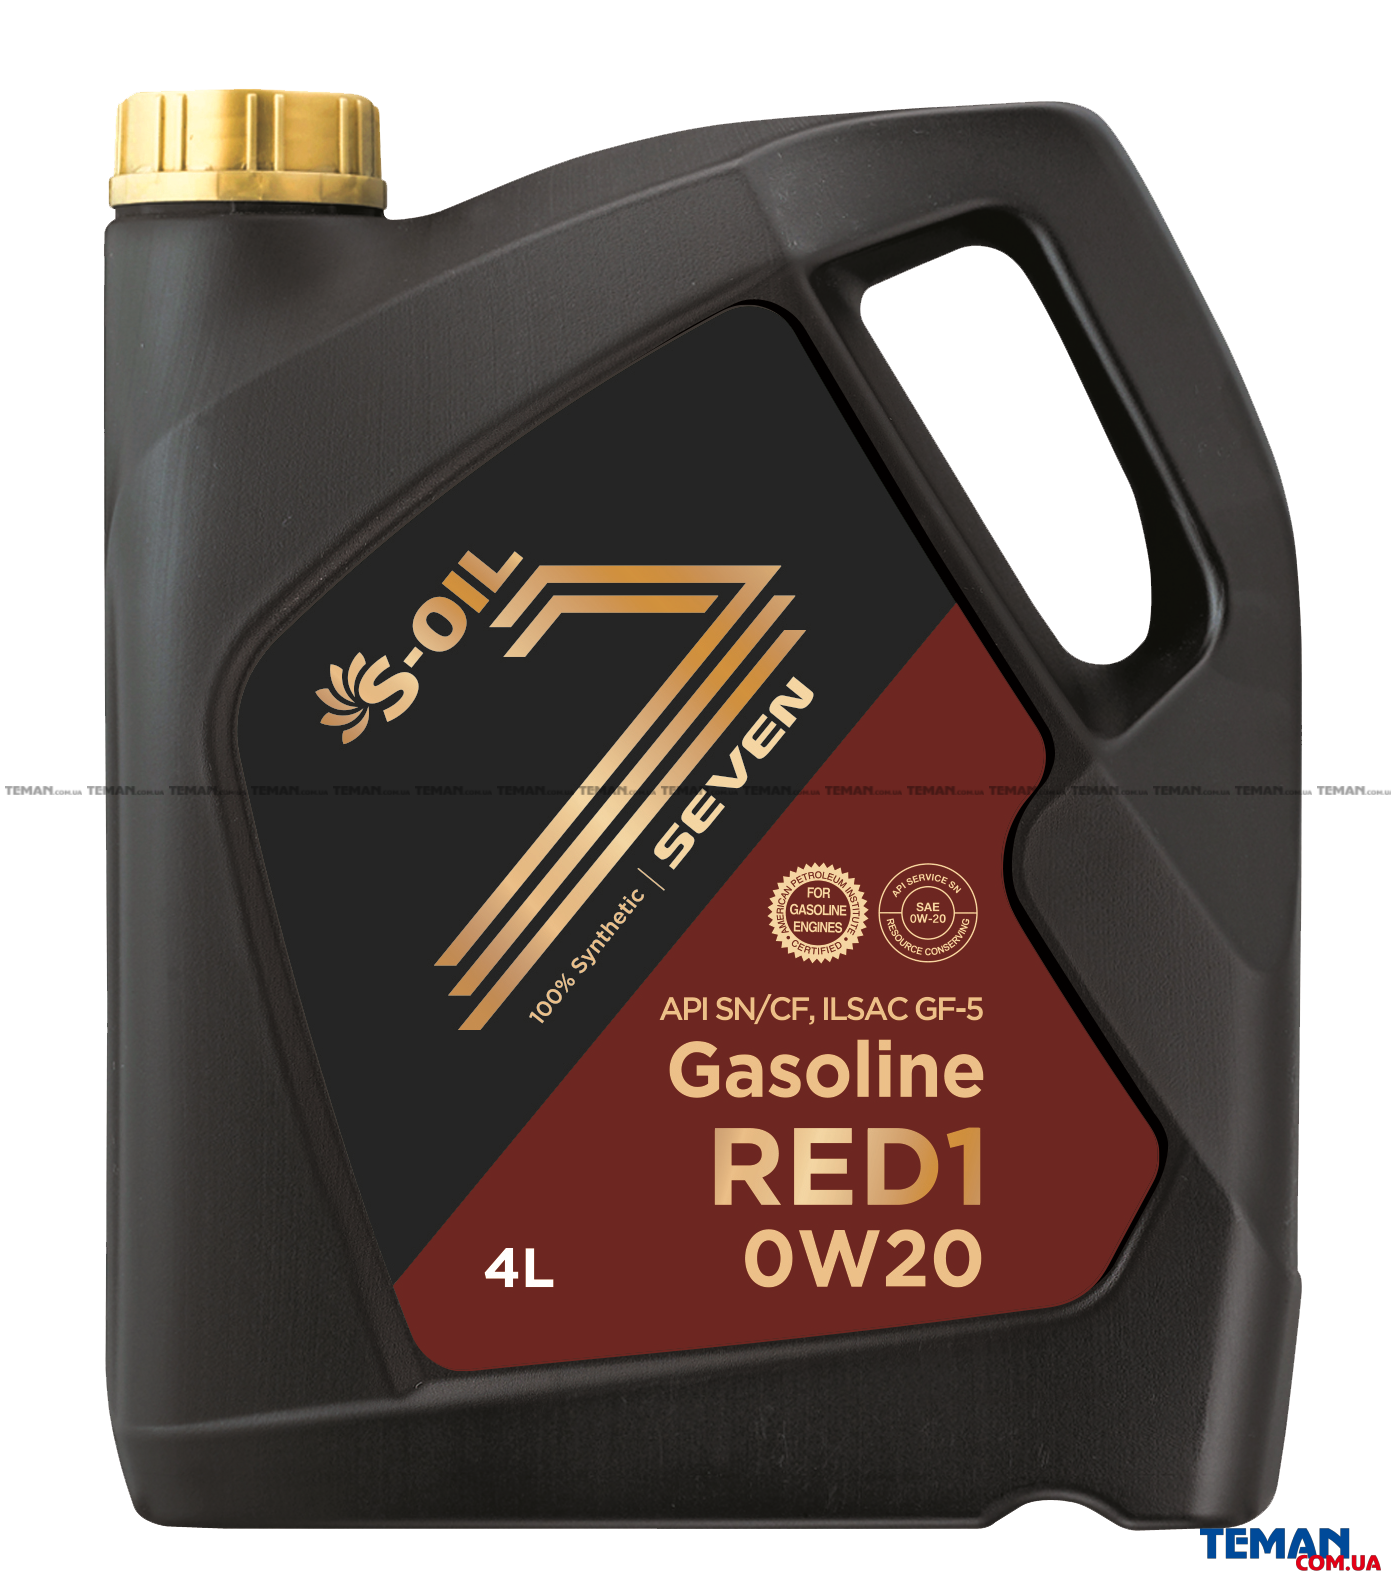  Купить Синтетическое моторное масло SEVEN RED1 0W20, 4лS-OIL SEVENRED10W204   